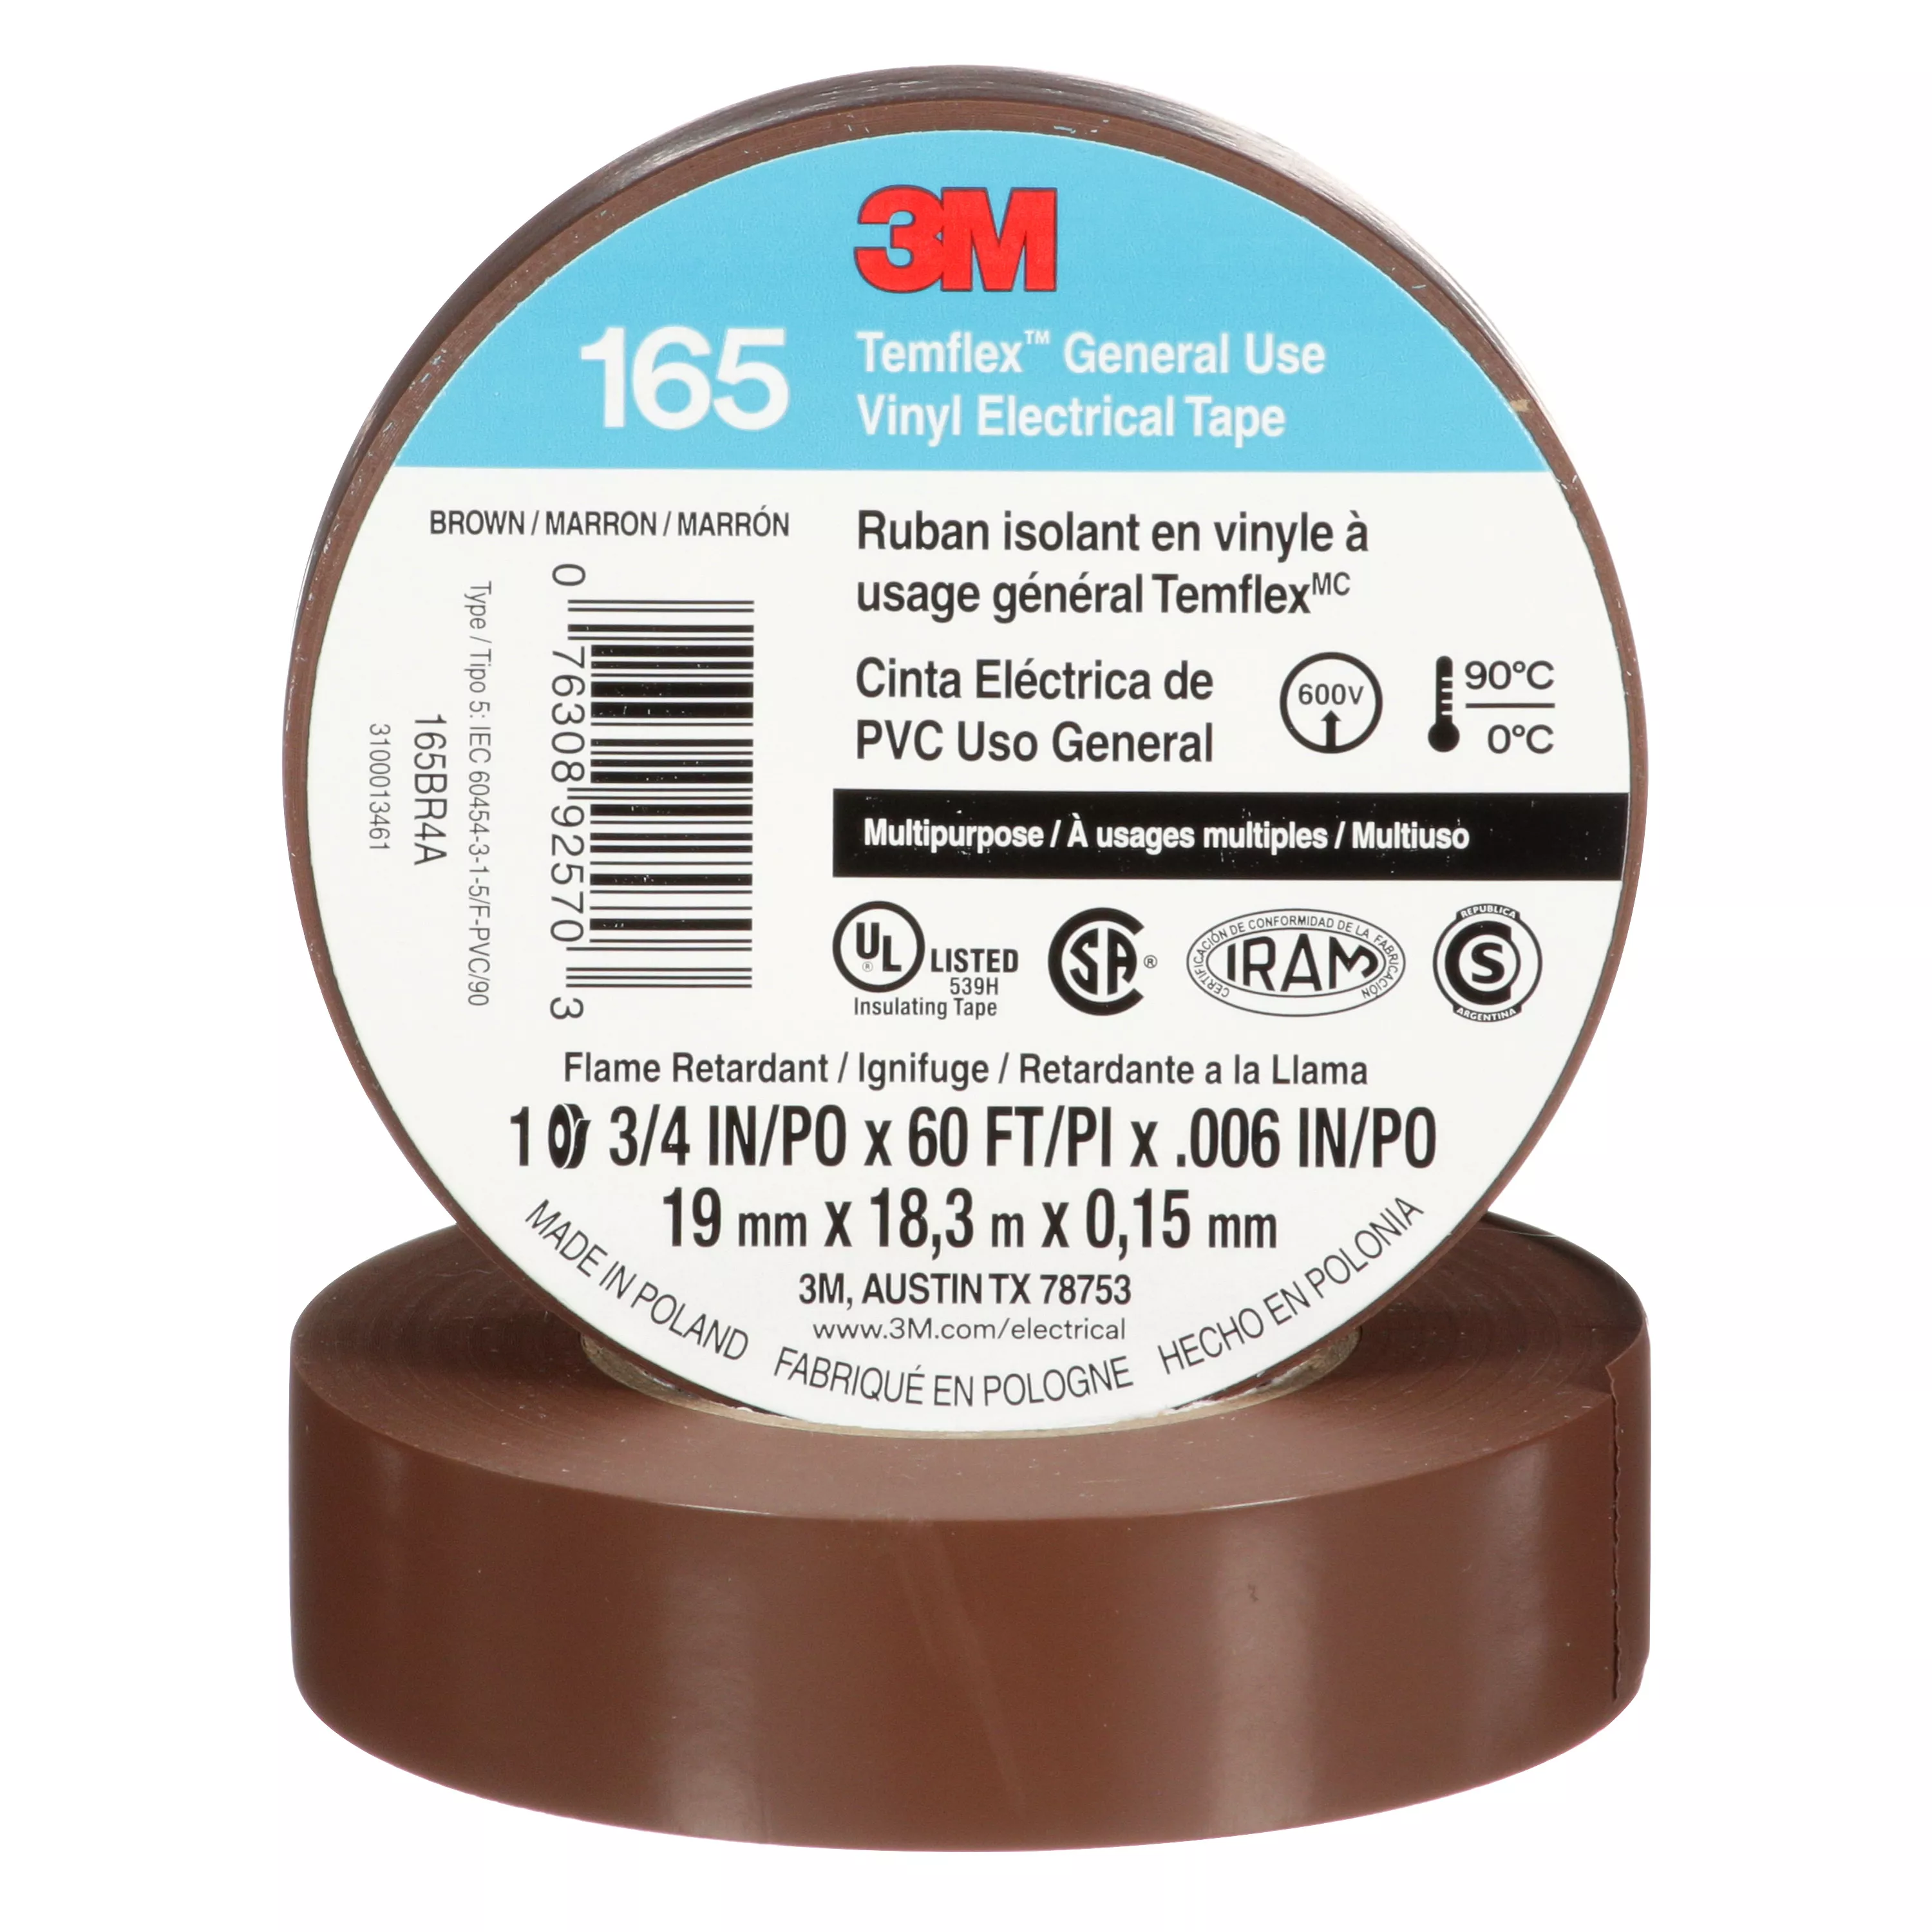 SKU 7100169191 | 3M™ Temflex™ Vinyl Electrical Tape 165